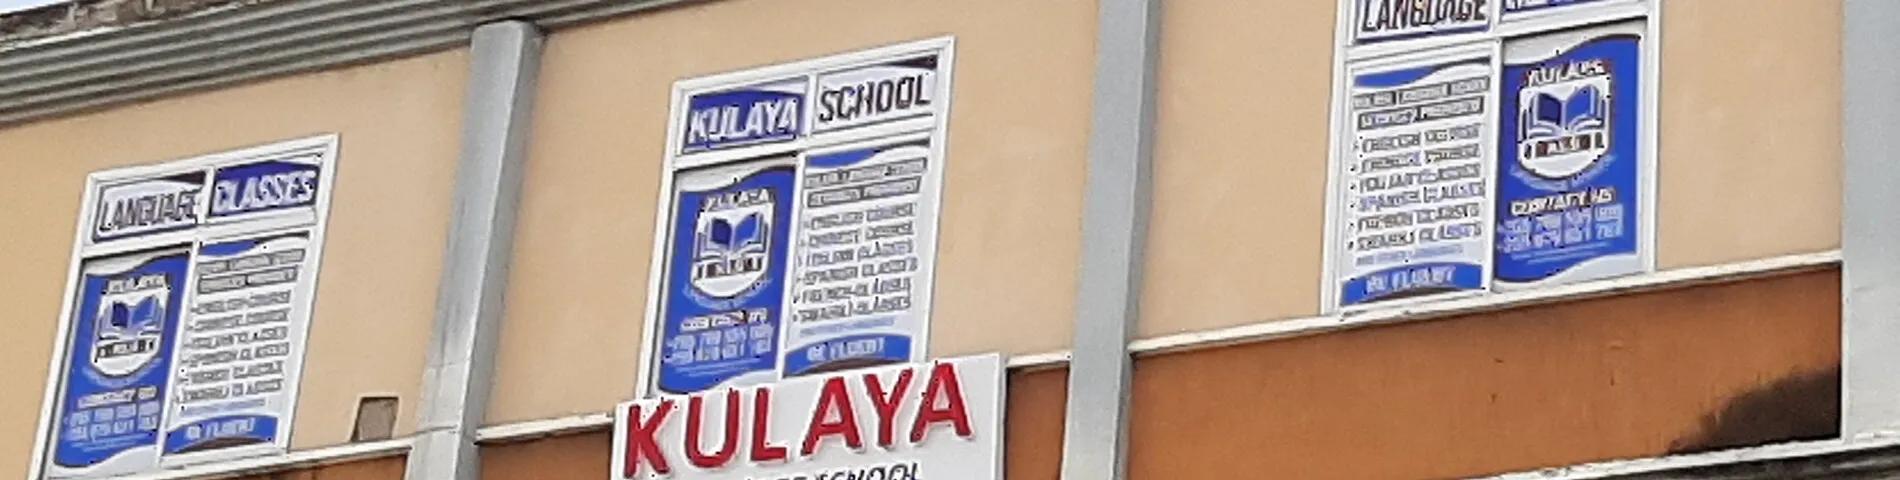 Kulaya Language School resim 1